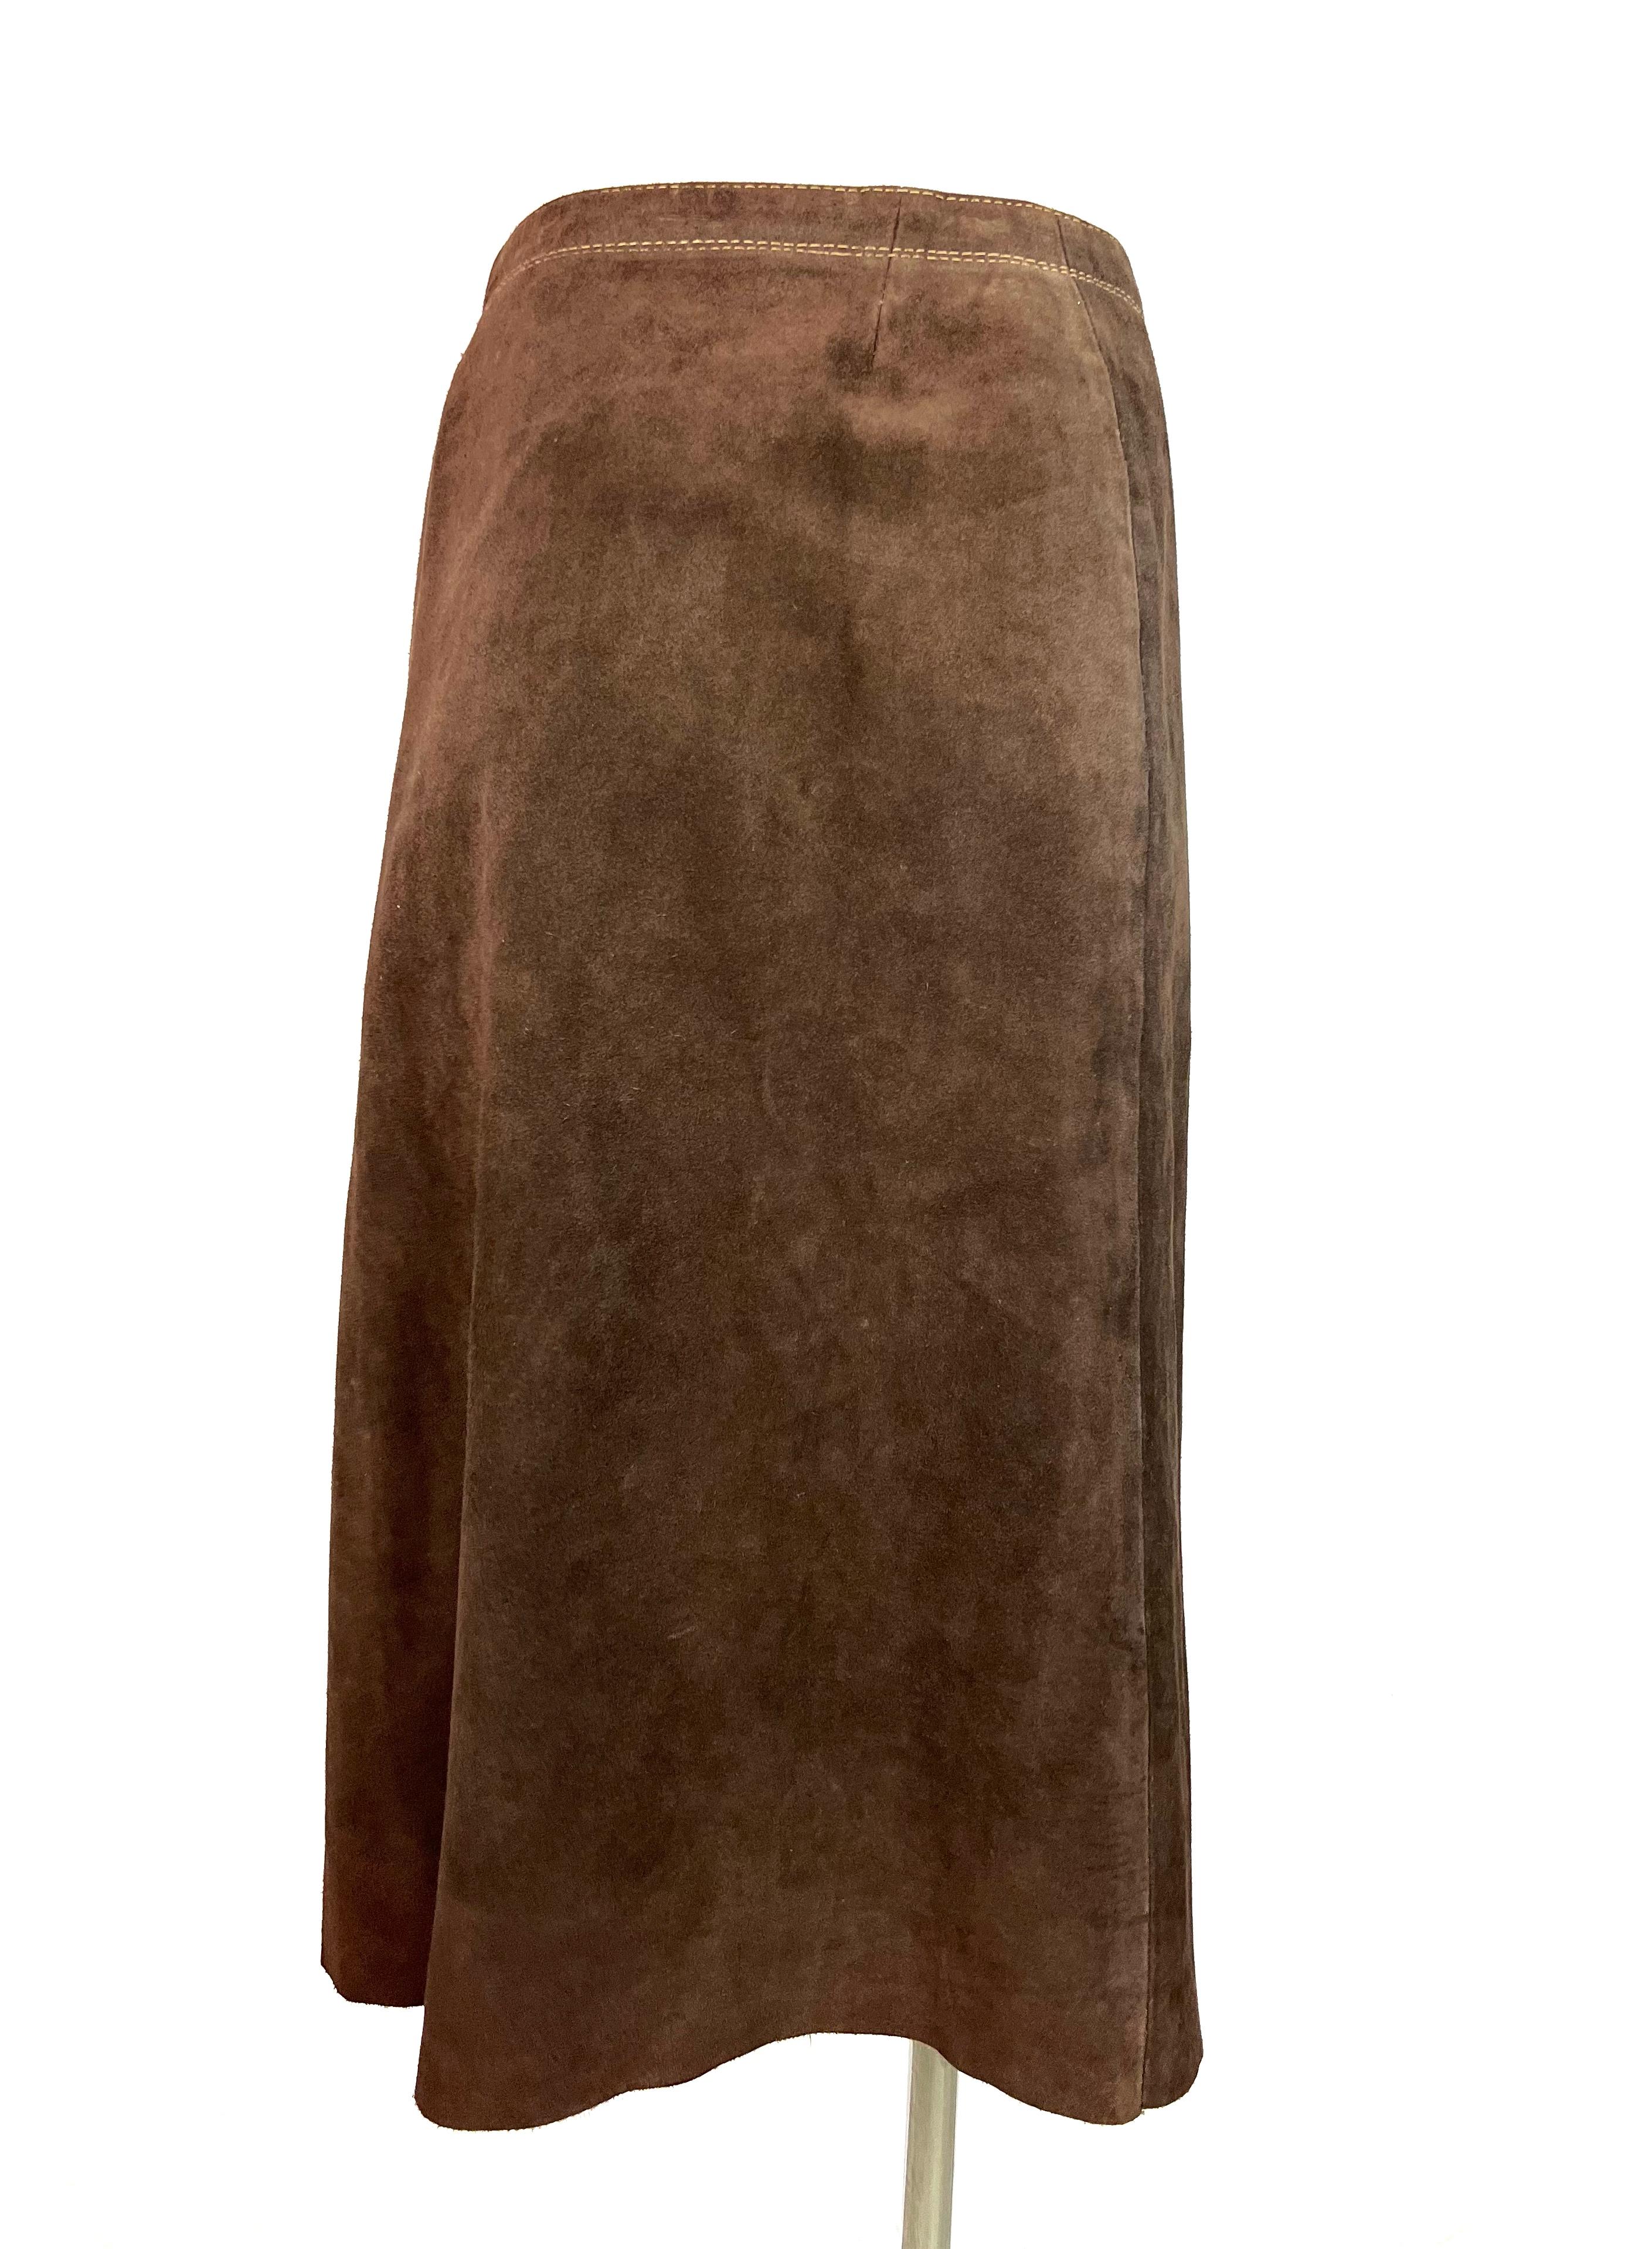 brown suede skirt midi